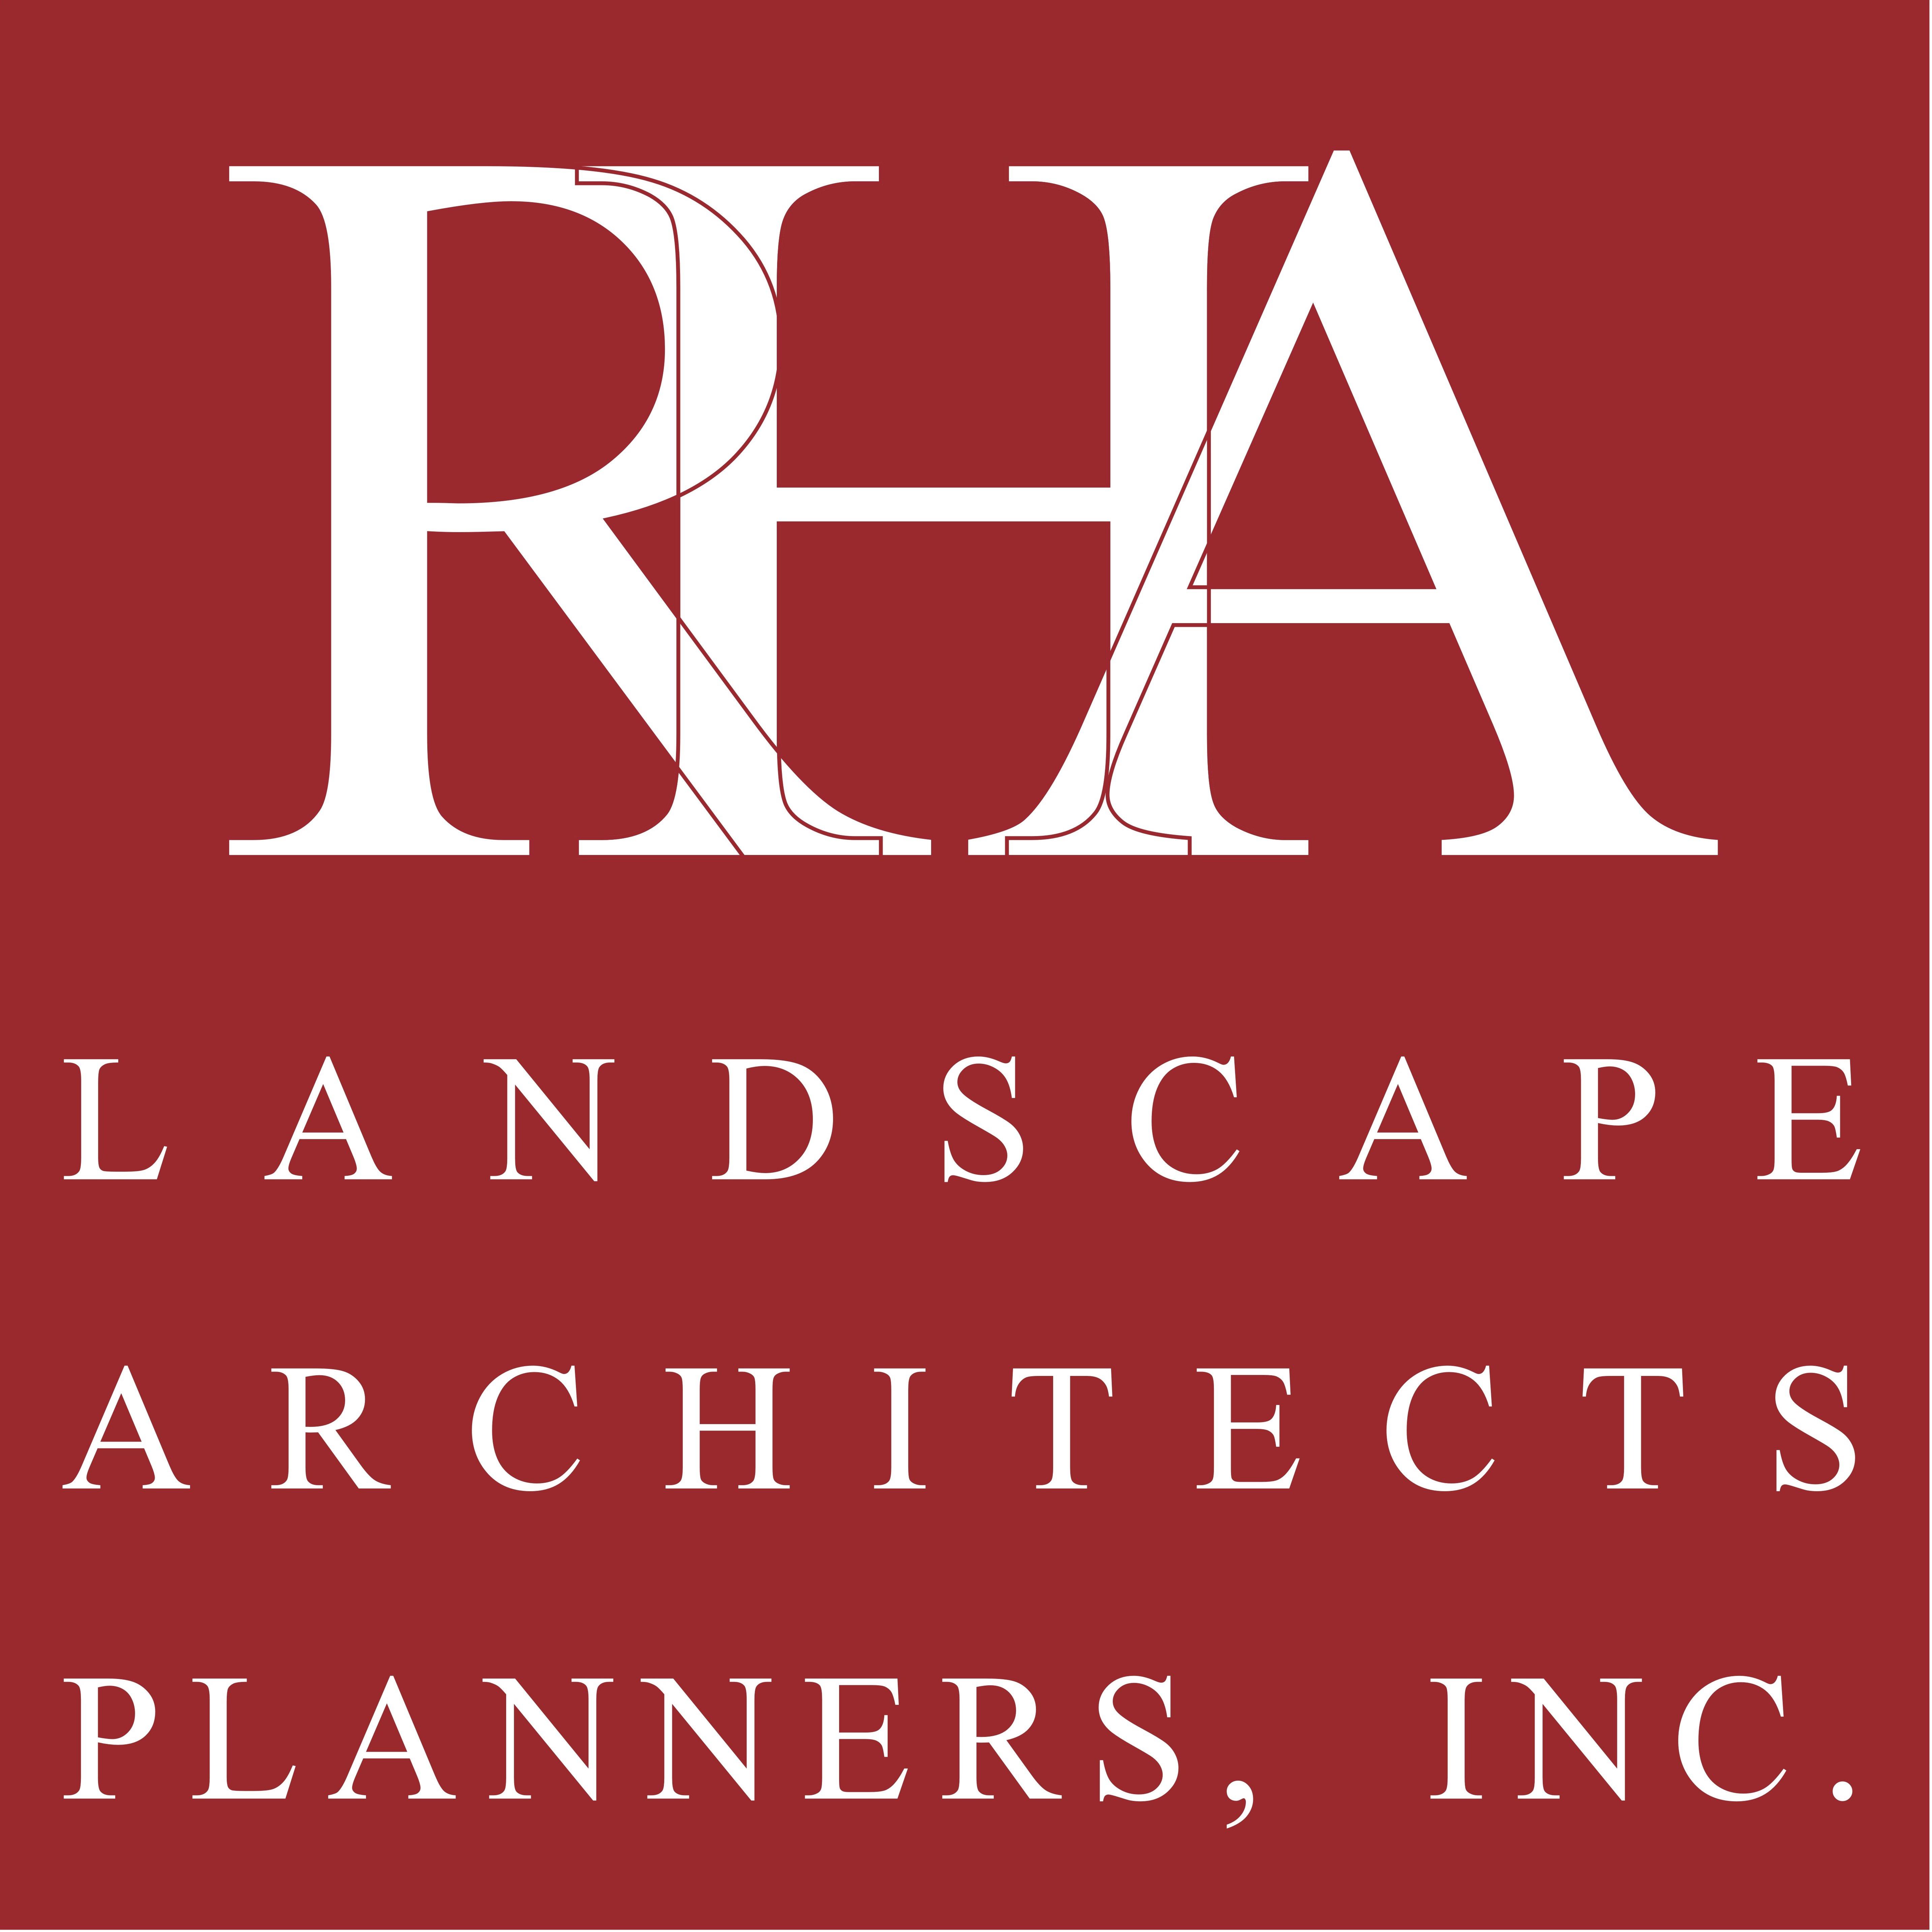 RHA Landscape Architects Planners, Inc.